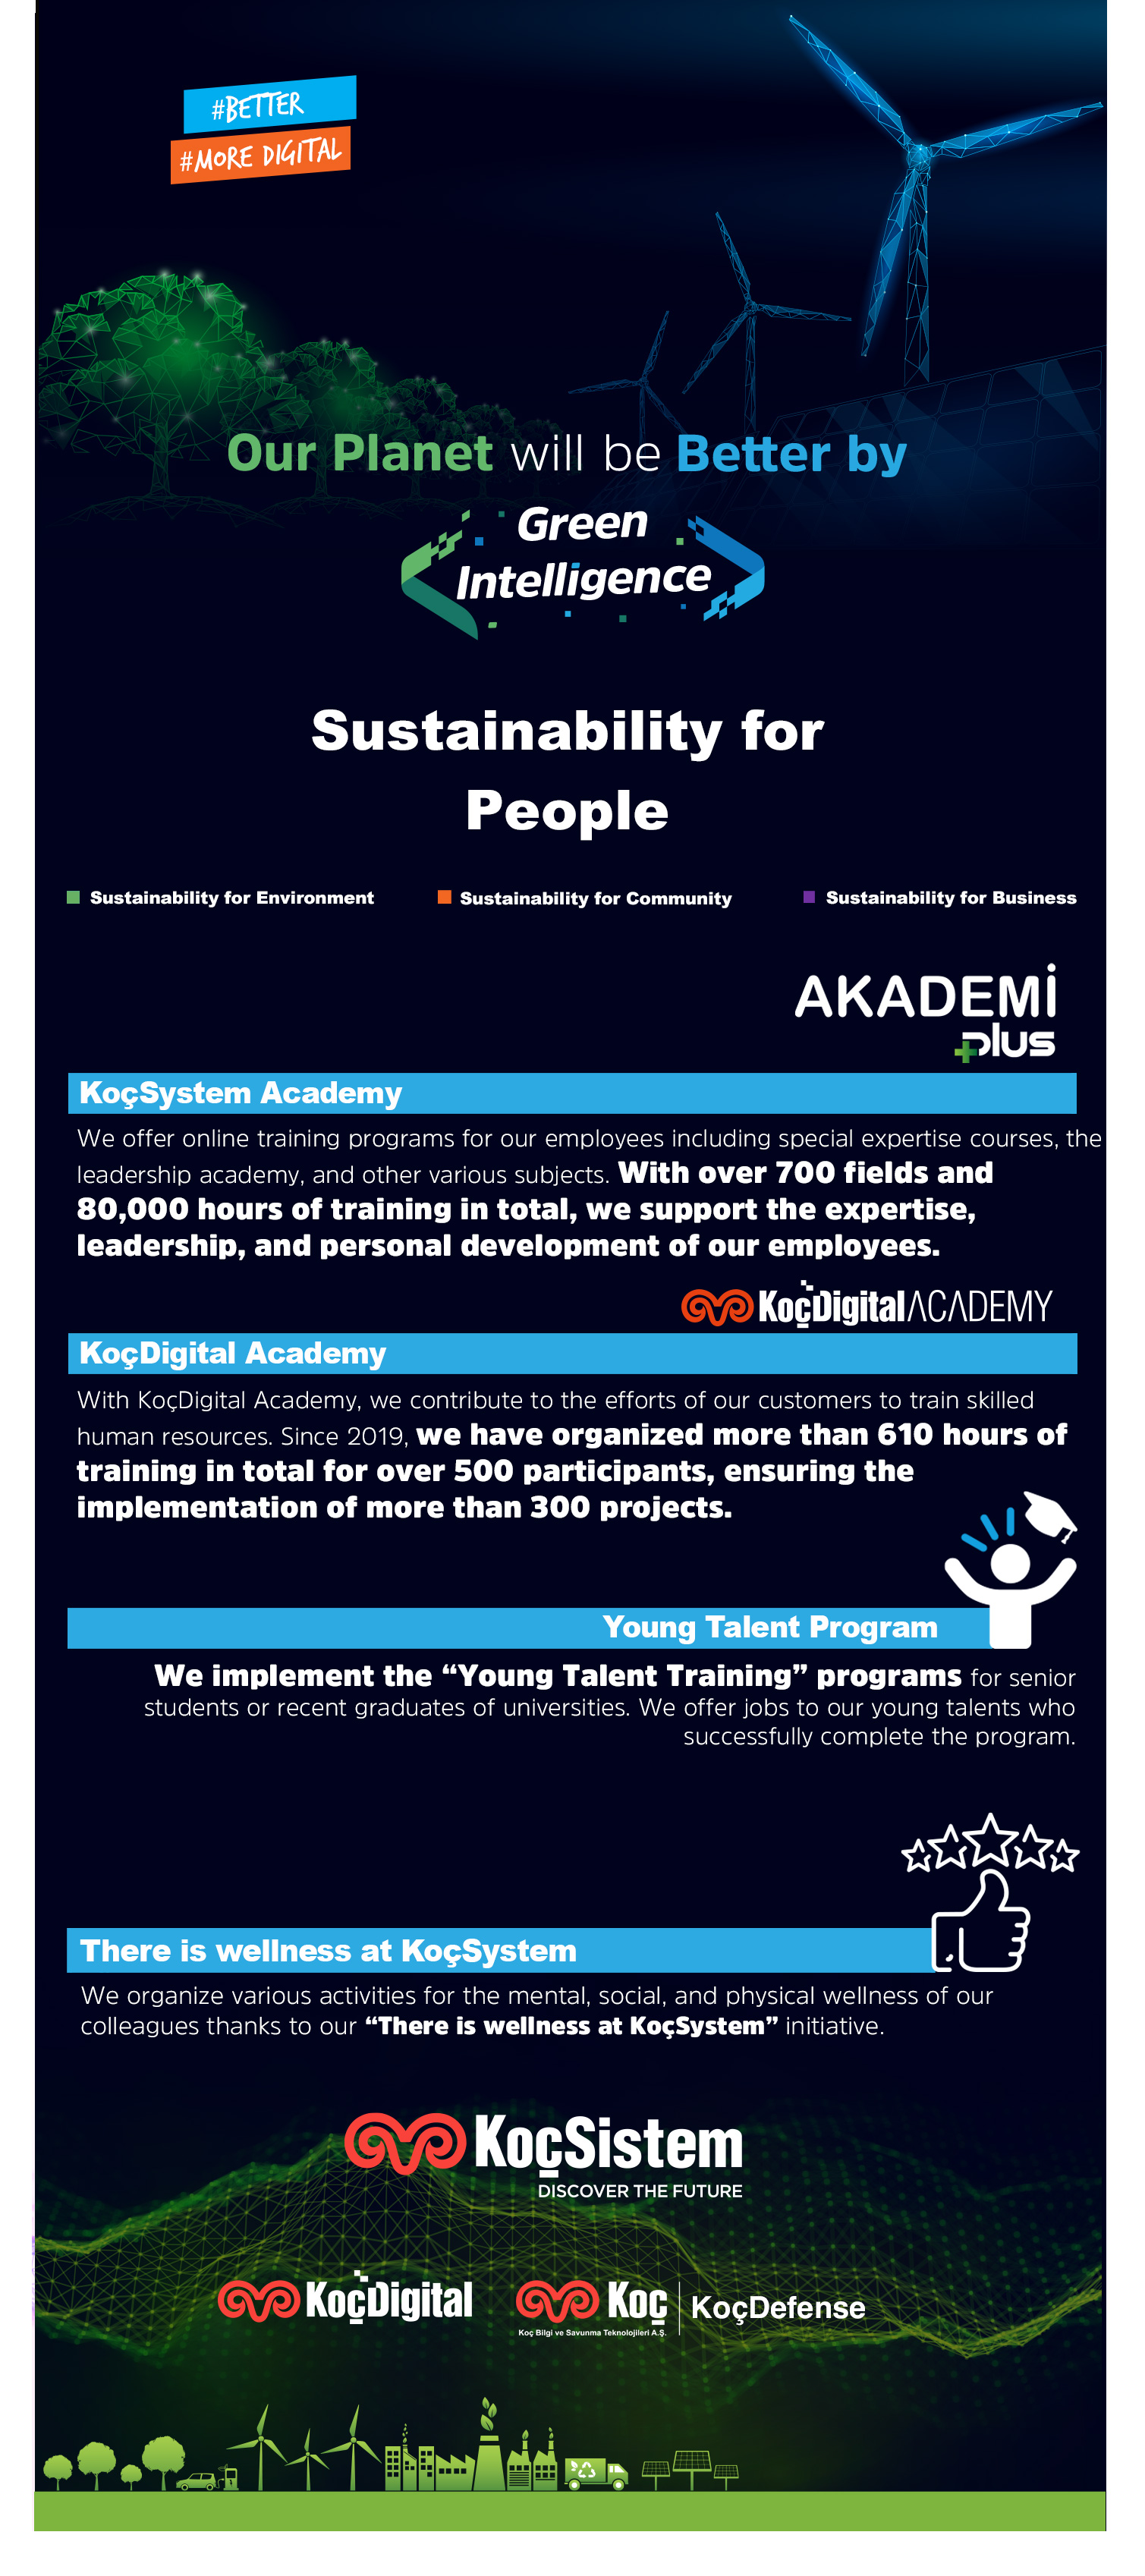 KoçSistem's Green Intelligence Project's Website - NYX Awards Winner 